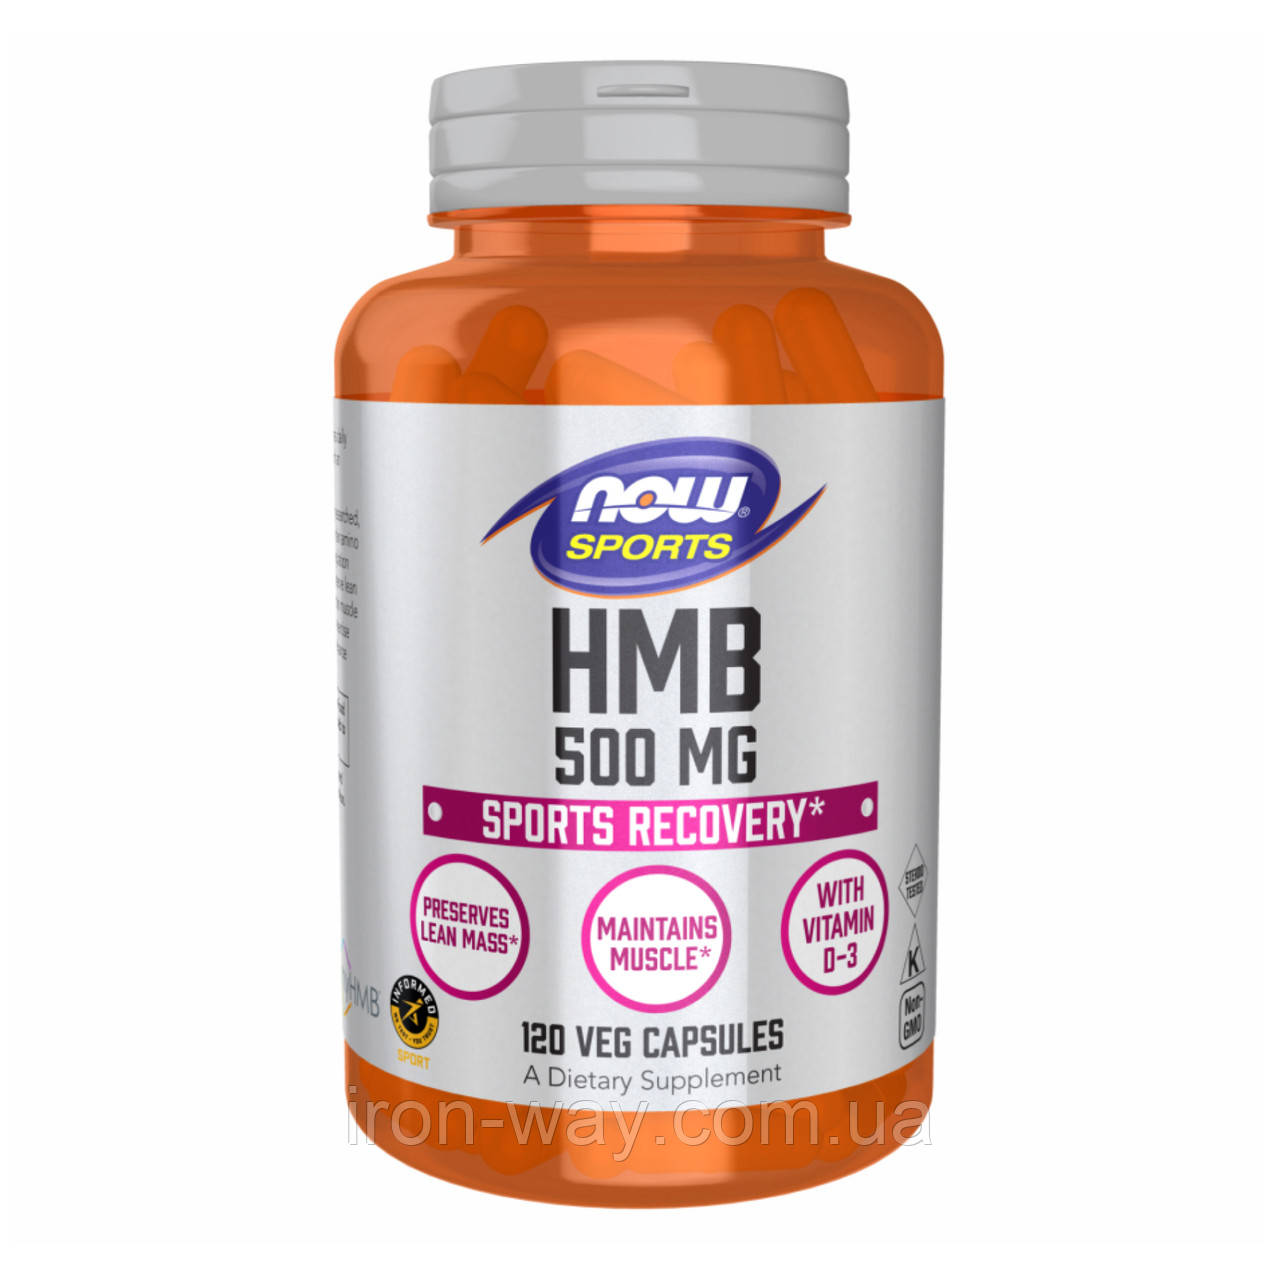 NOW HMB 500 mg 120 vcaps